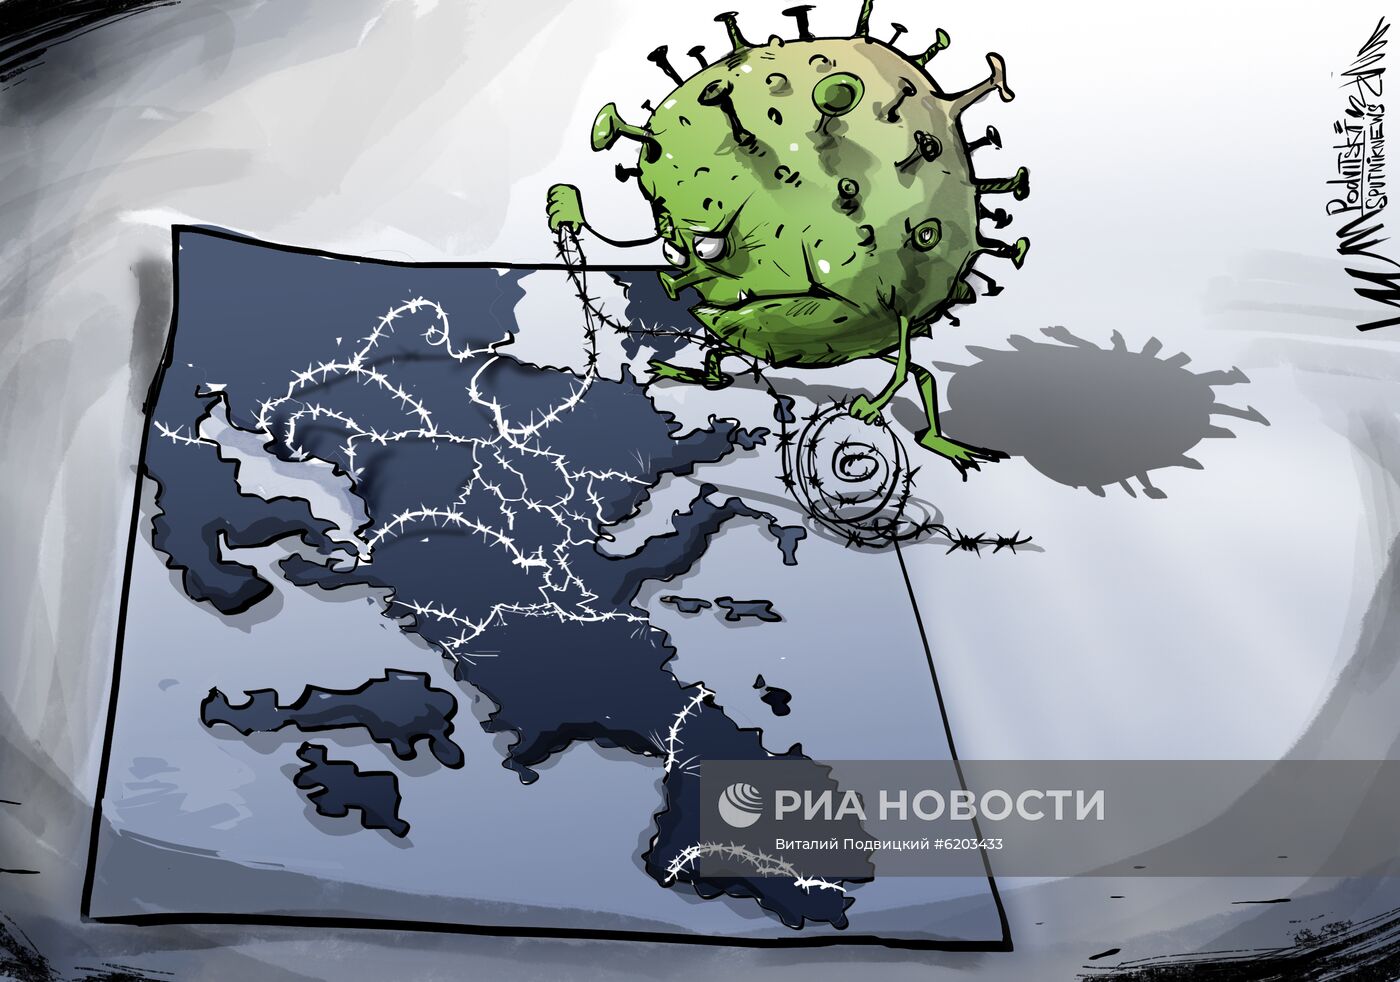 Пандемия Covid-19 нанесла мощный удар по идее глобализации